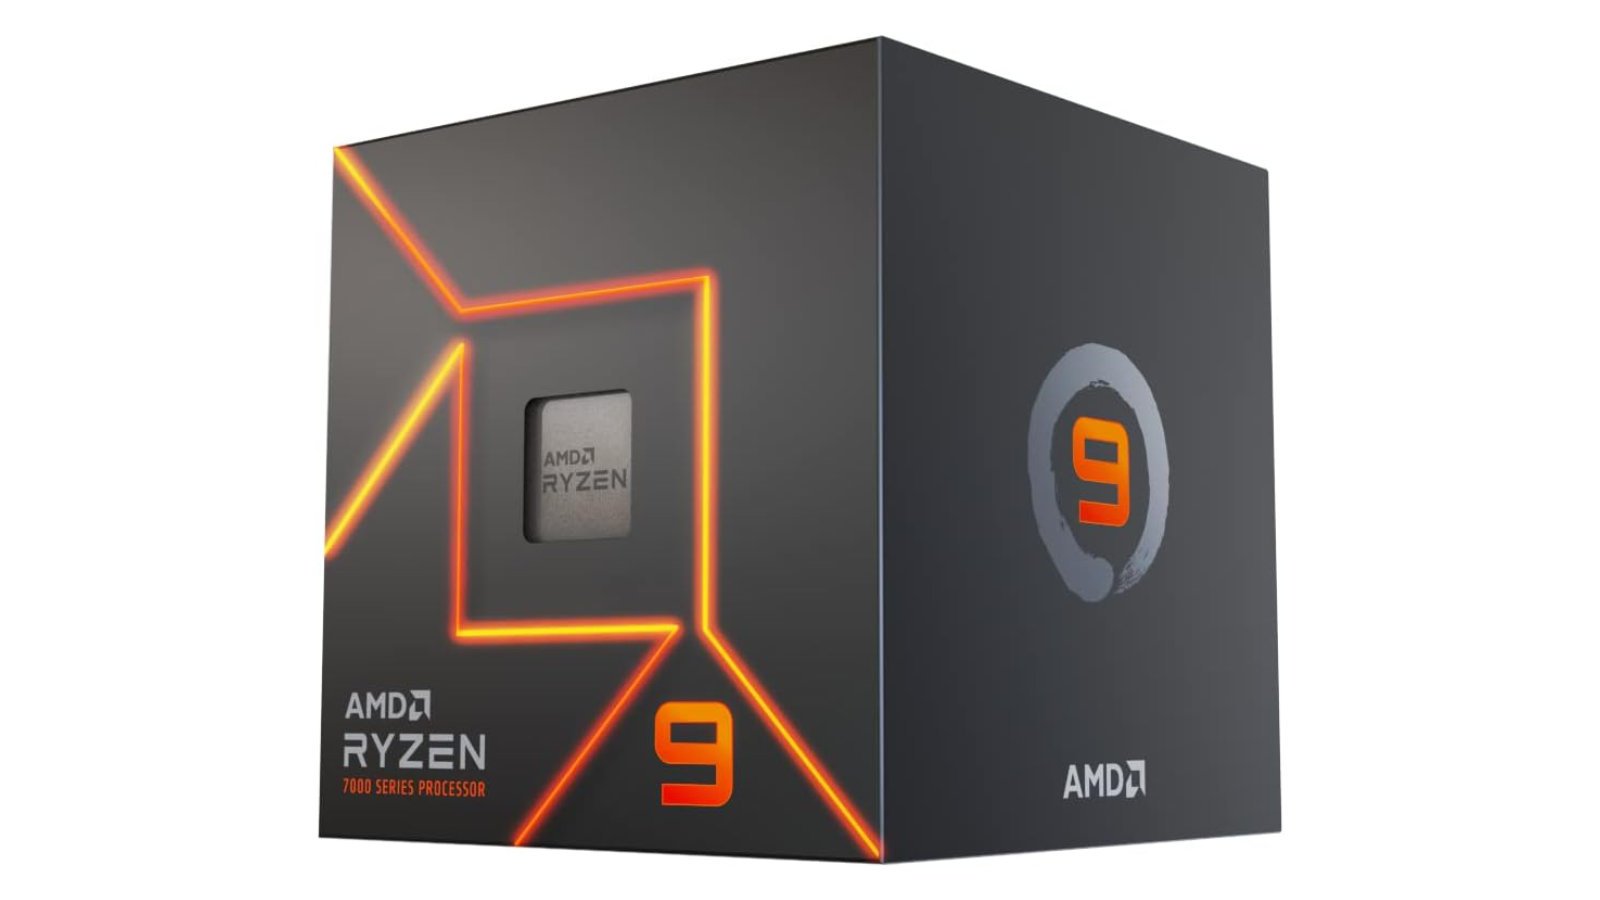 AMD Ryzen 9 7900 CPU product retail packaging.